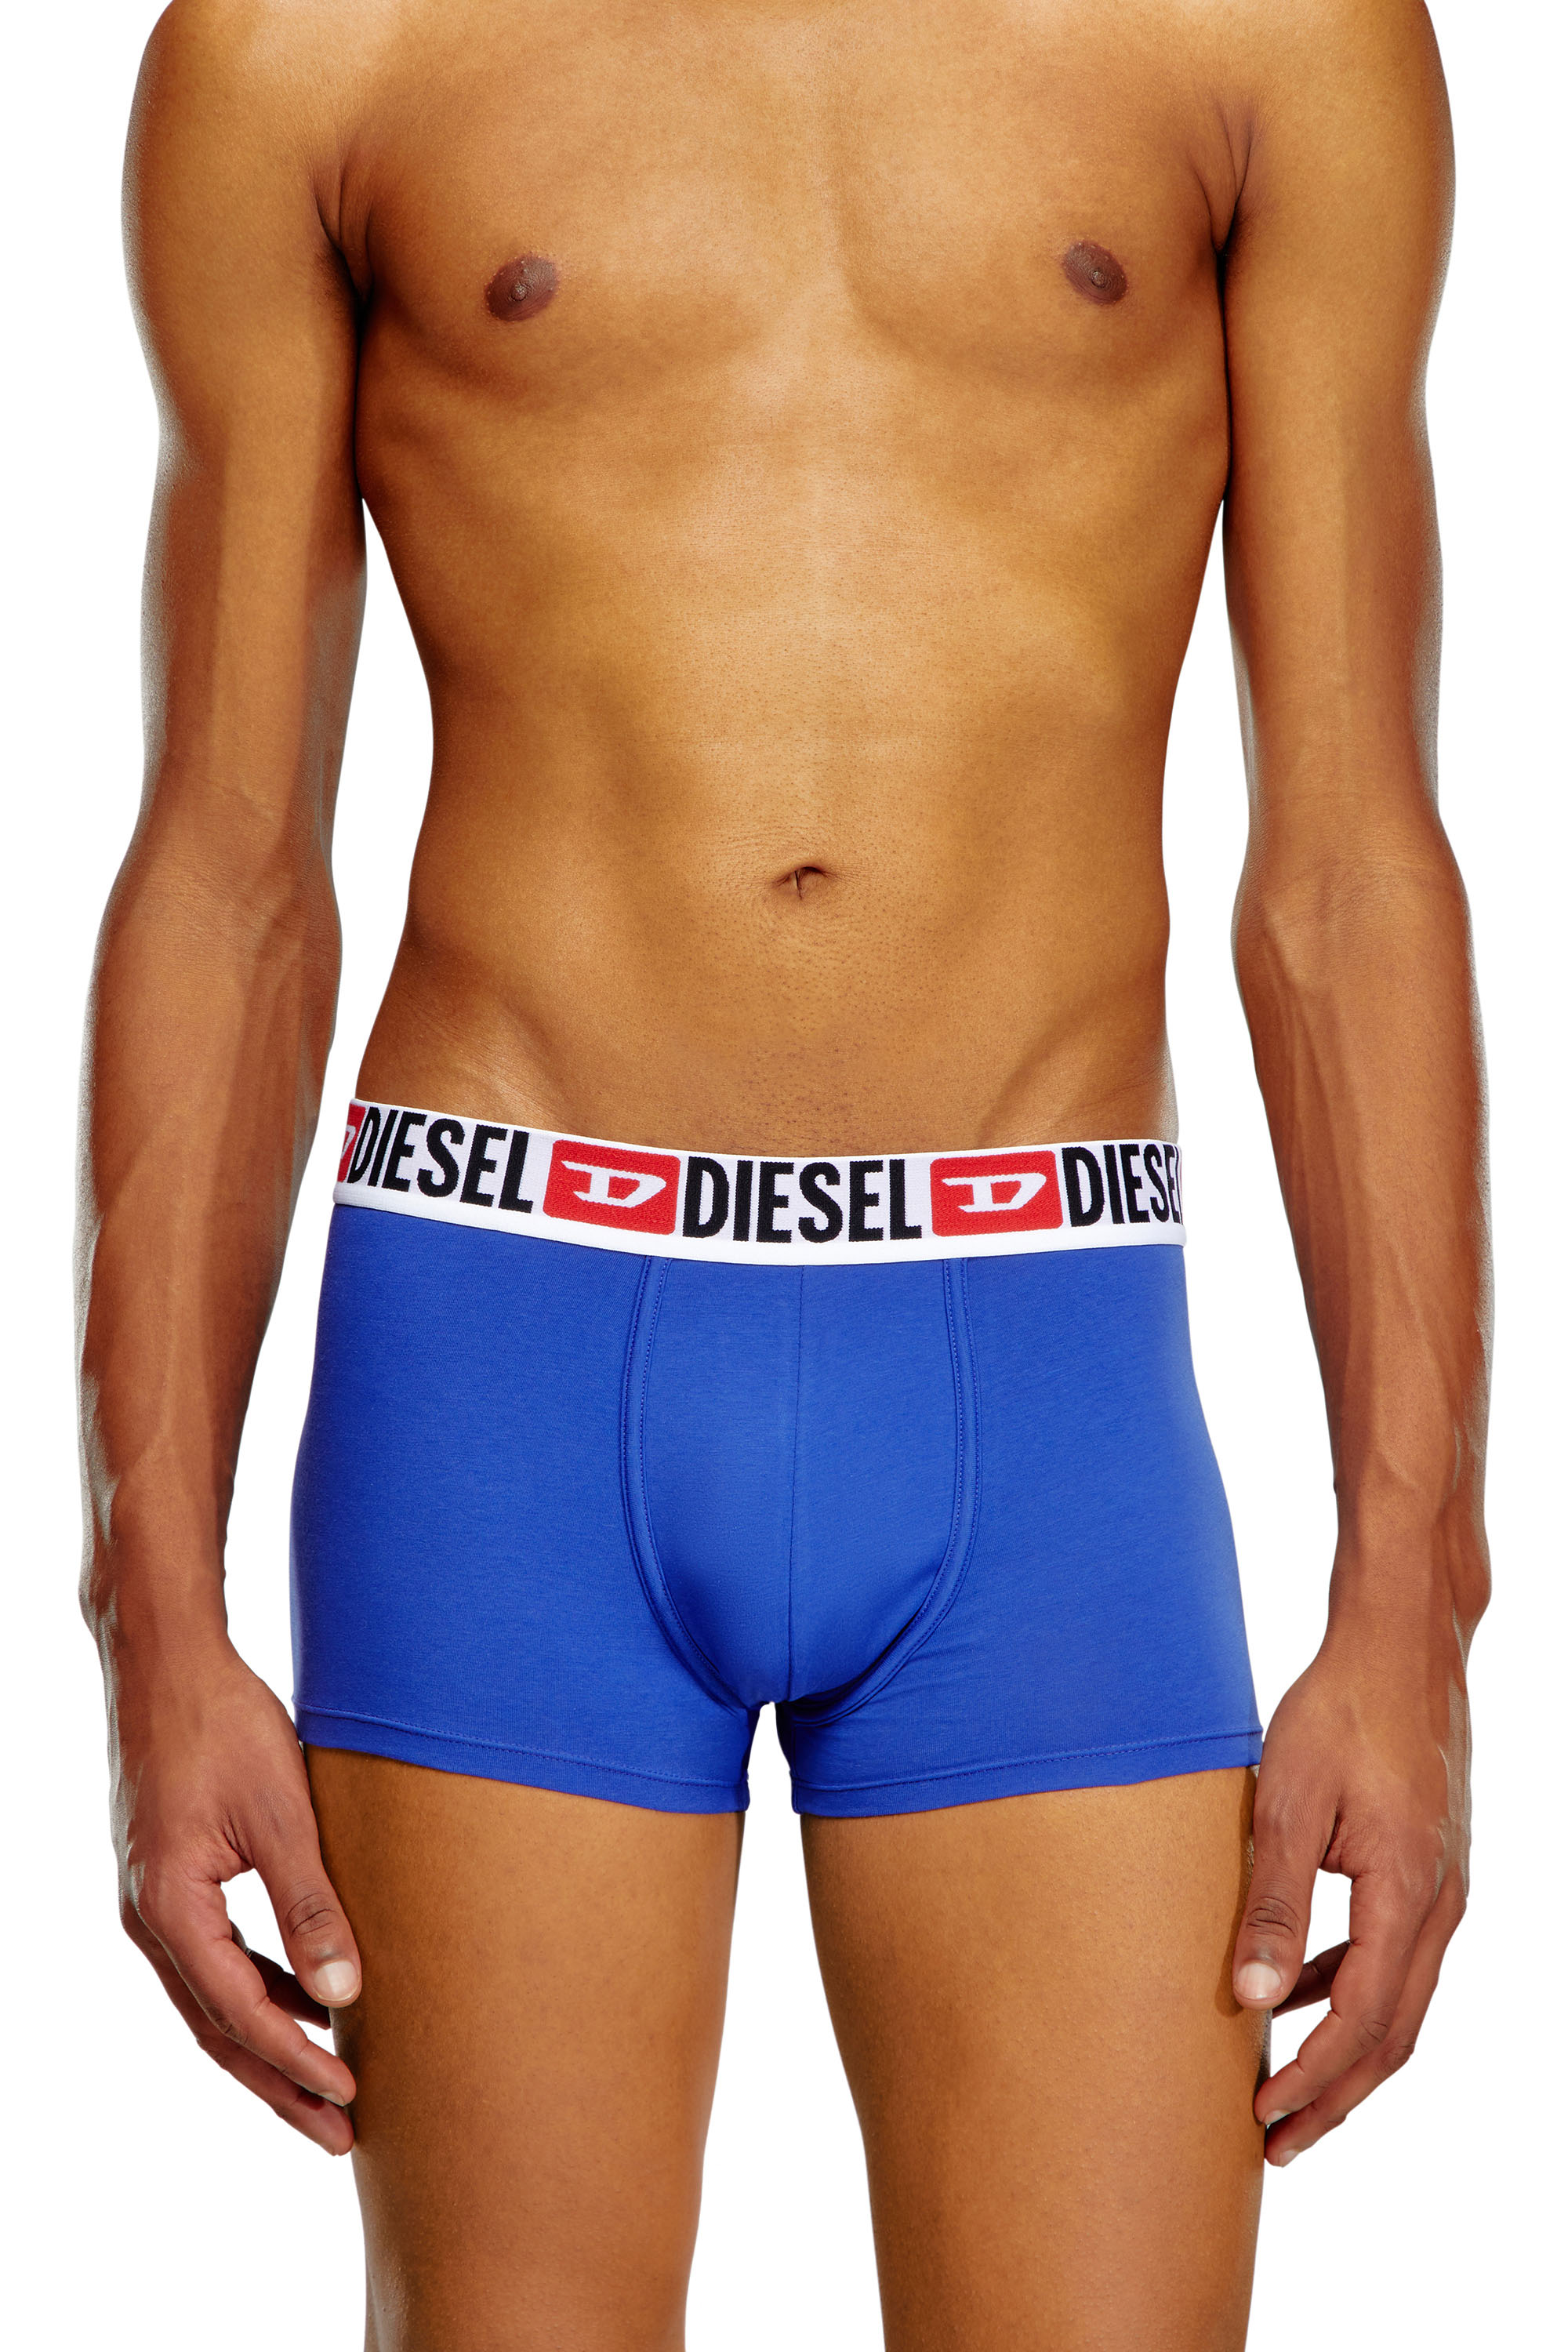 Underwear Review: Diesel Mens Trunk UMBX-SHAWN THREE PACK - Men's